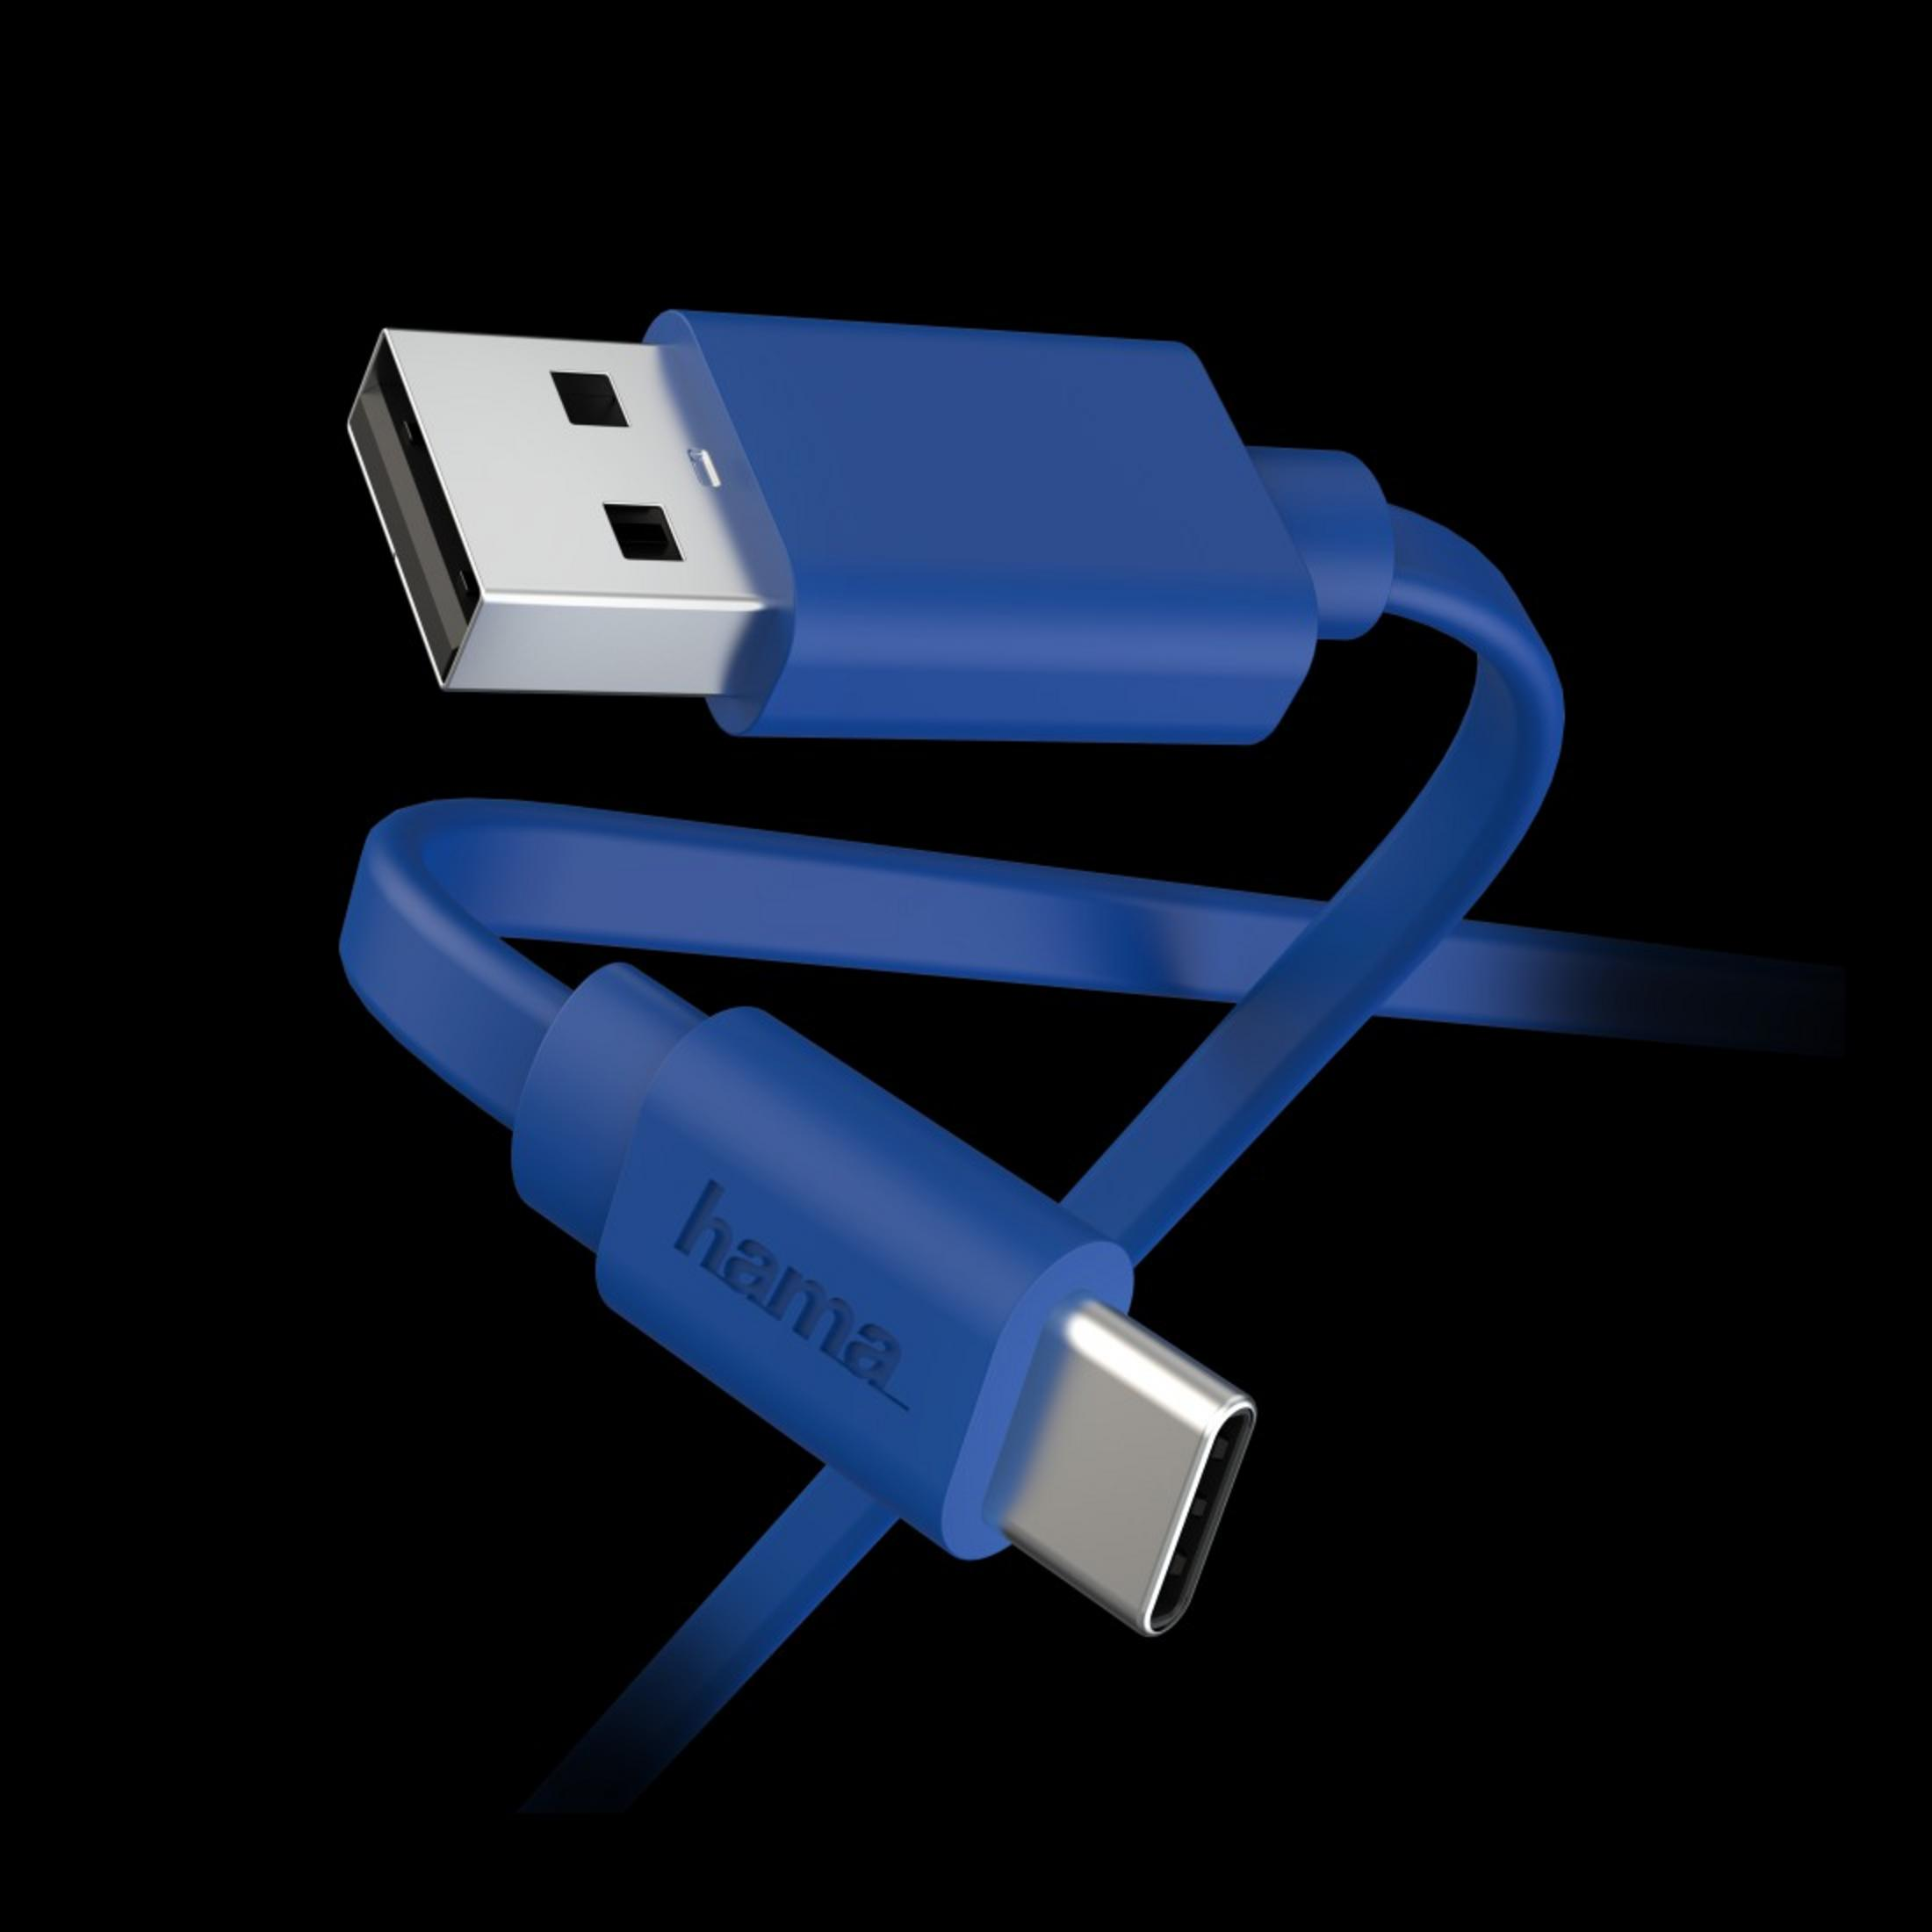 LAD-DAT-KAB,FLAT,USB-A-USB-C, 1 Blau HAMA USB Kabel, 187229 m,